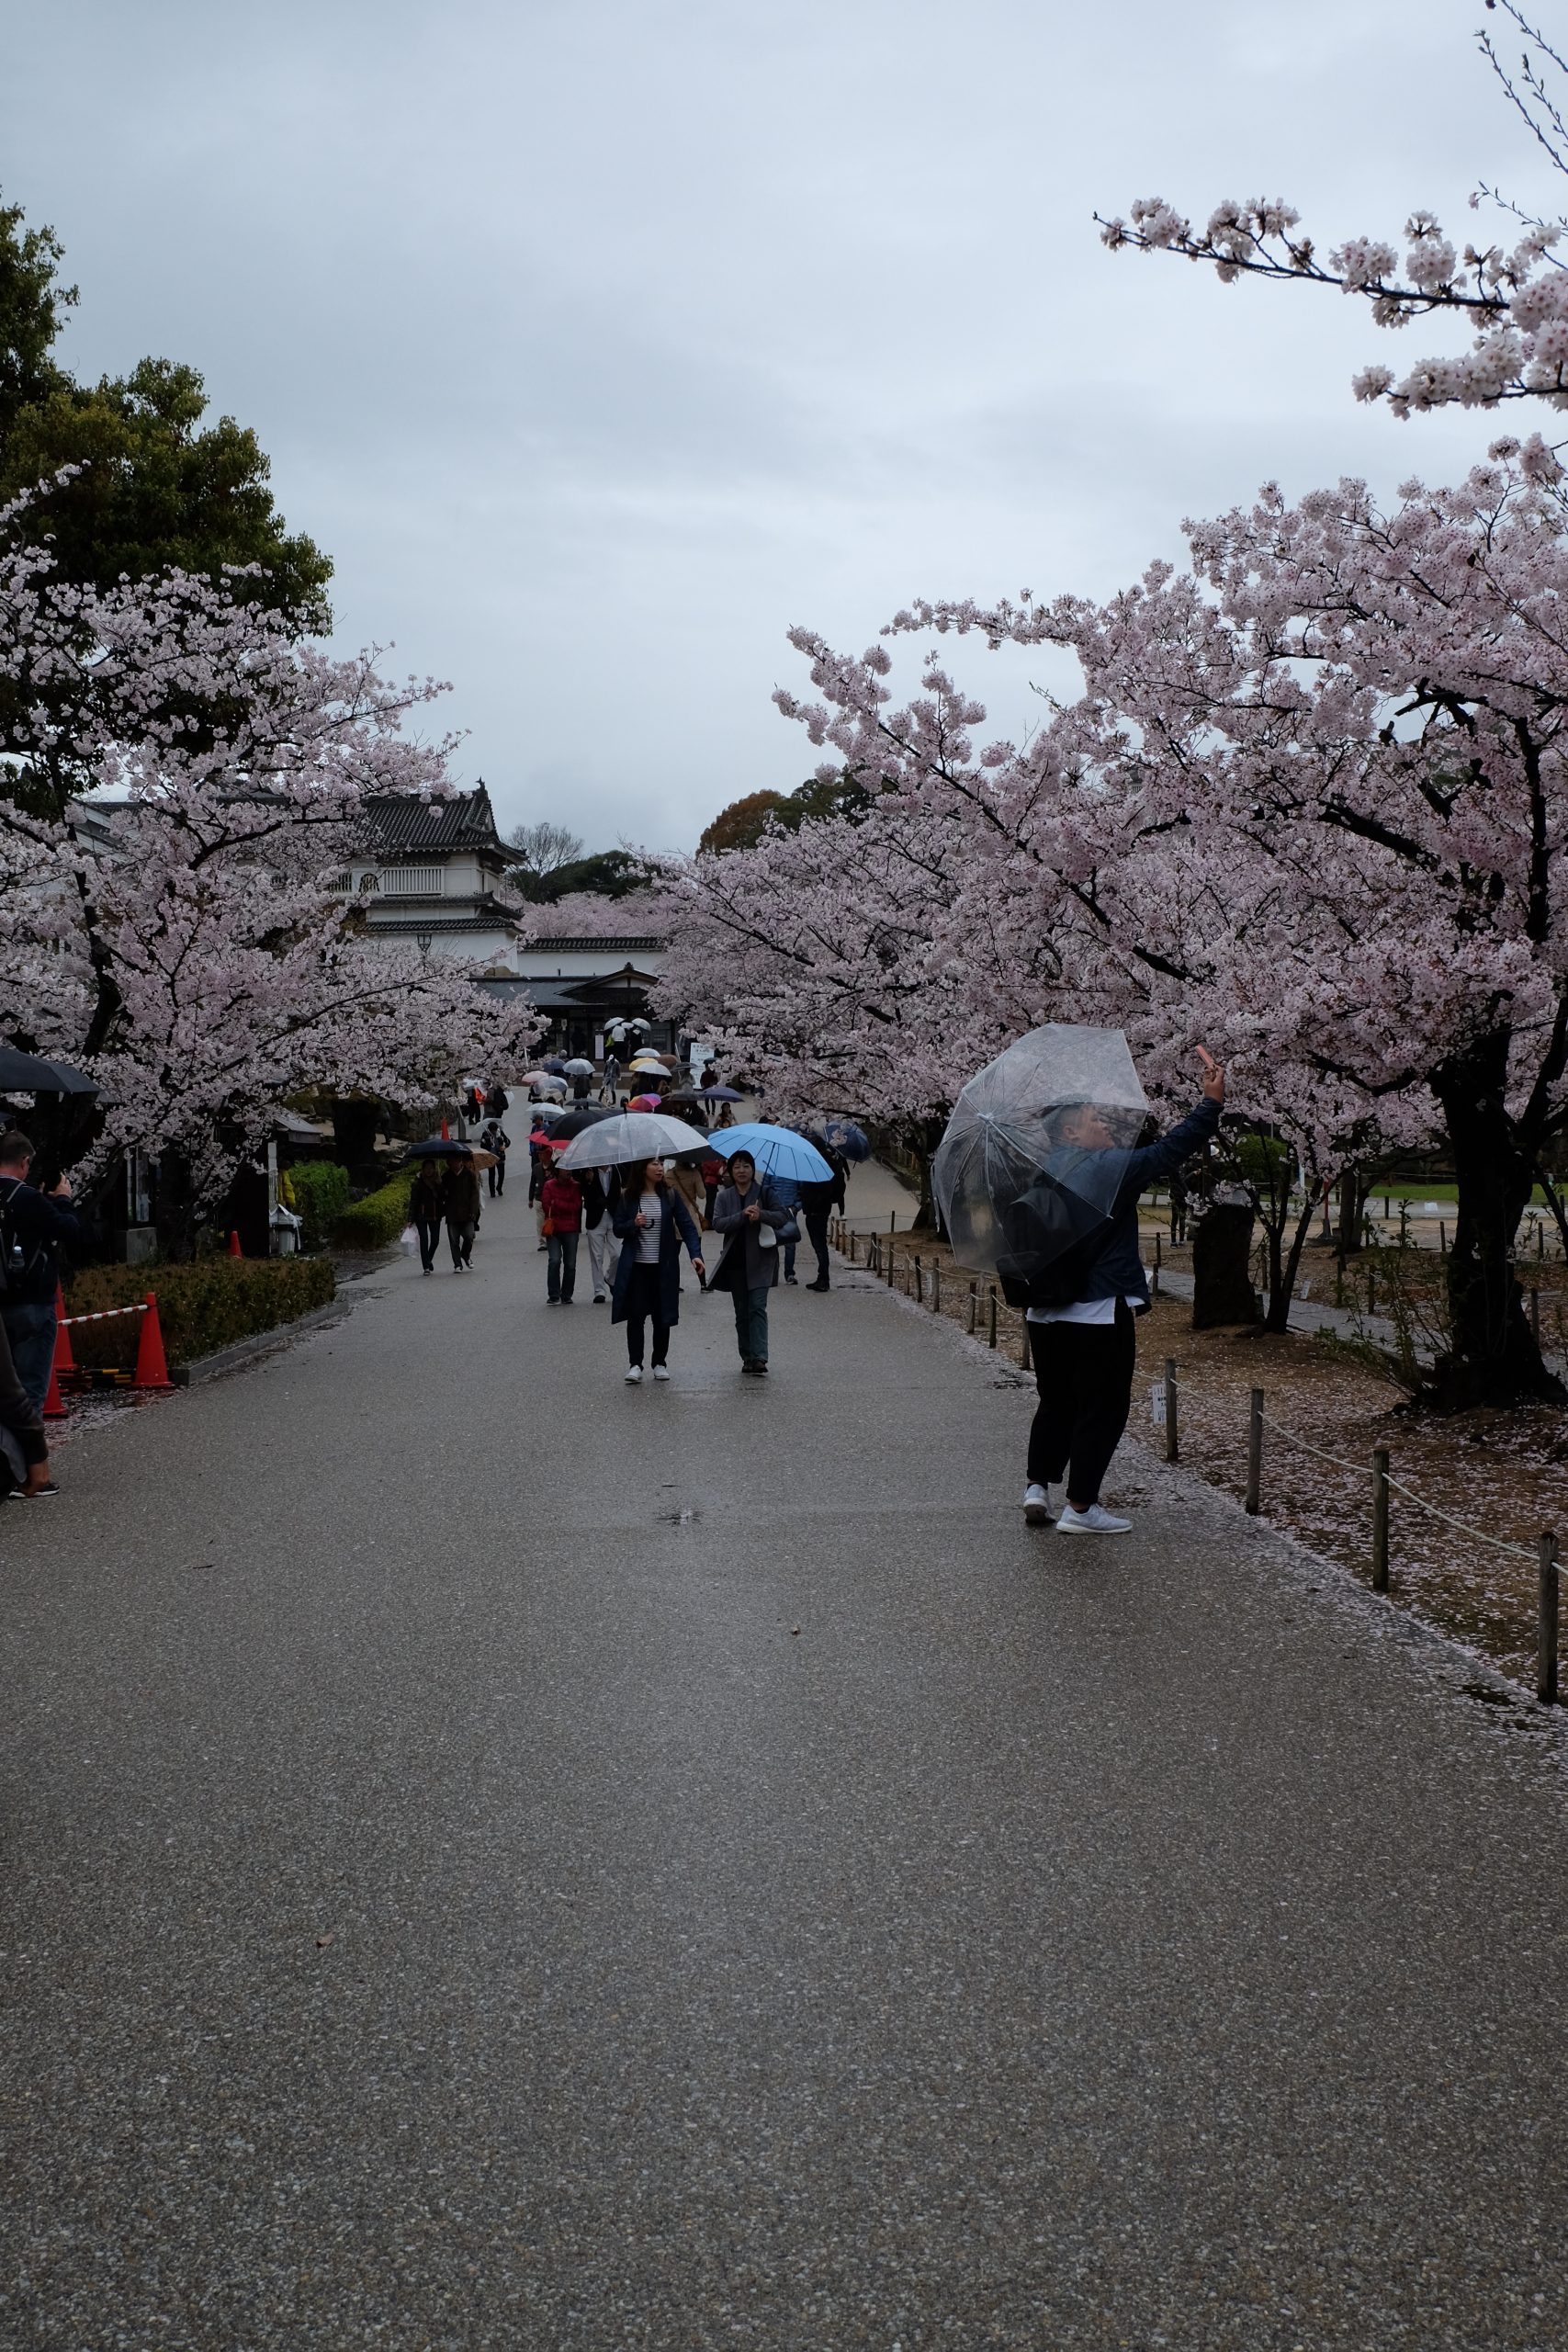 Visitors around Himeji castle in the Spring